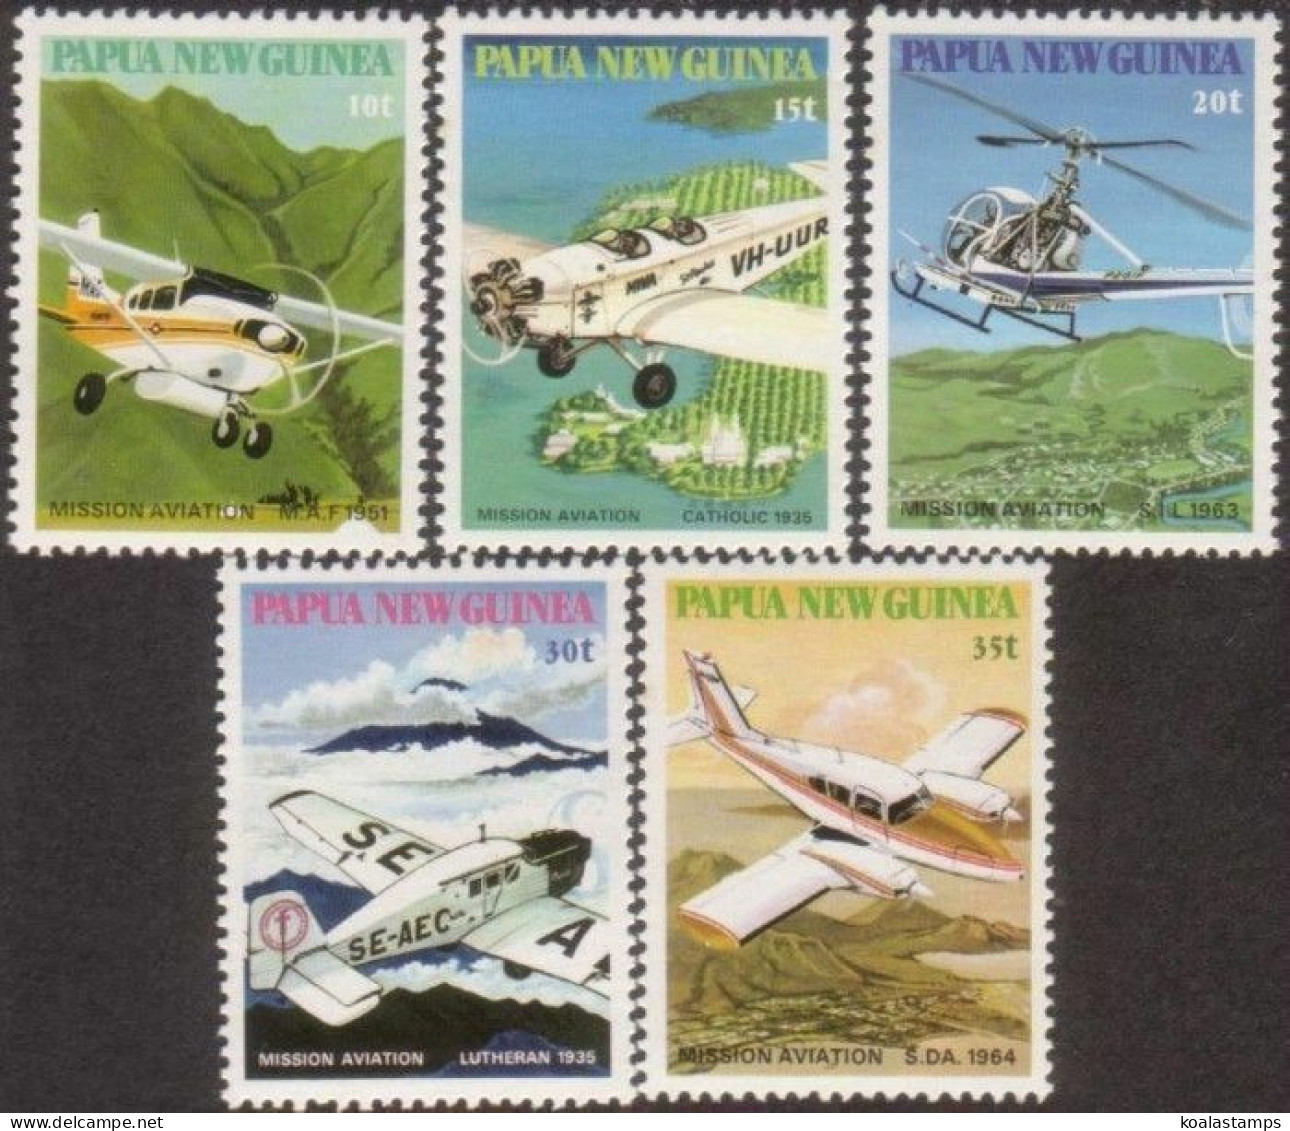 Papua New Guinea 1981 SG412-416 Mission Avation Set MNH - Papúa Nueva Guinea